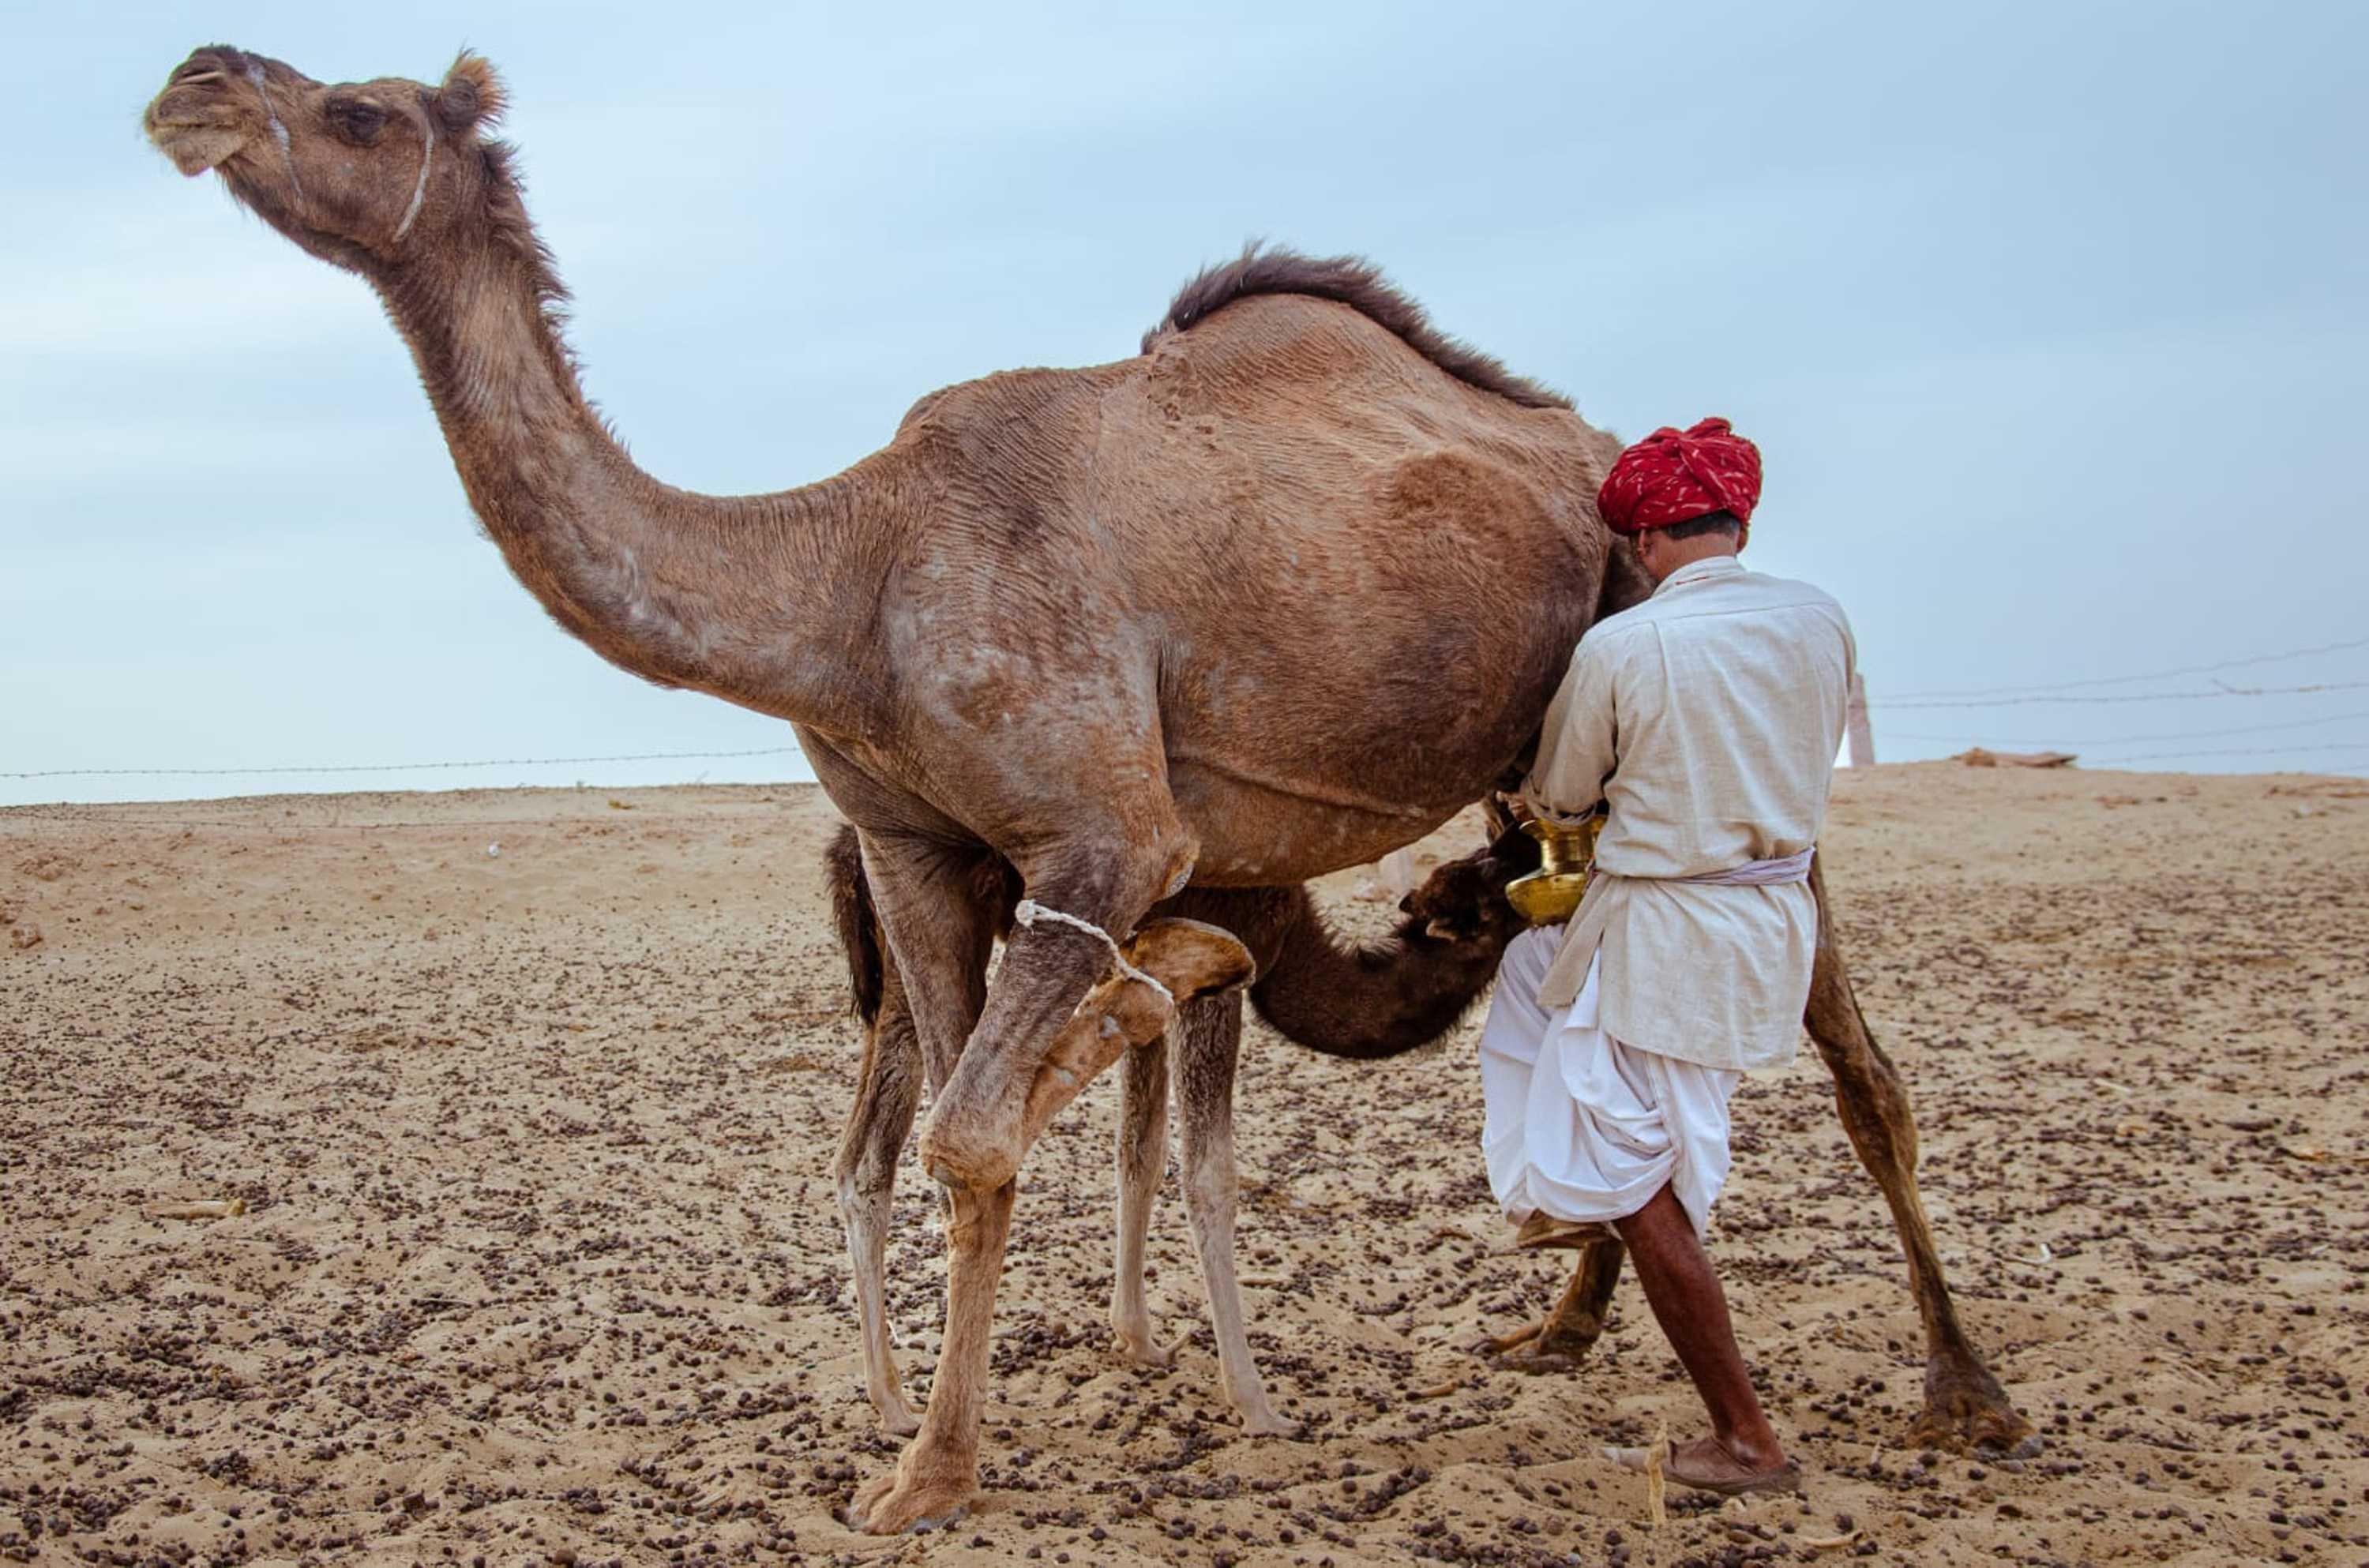 A herder milking his camel in Grandhi village of Rajasthan, India Jan 14. Photo: Reuters